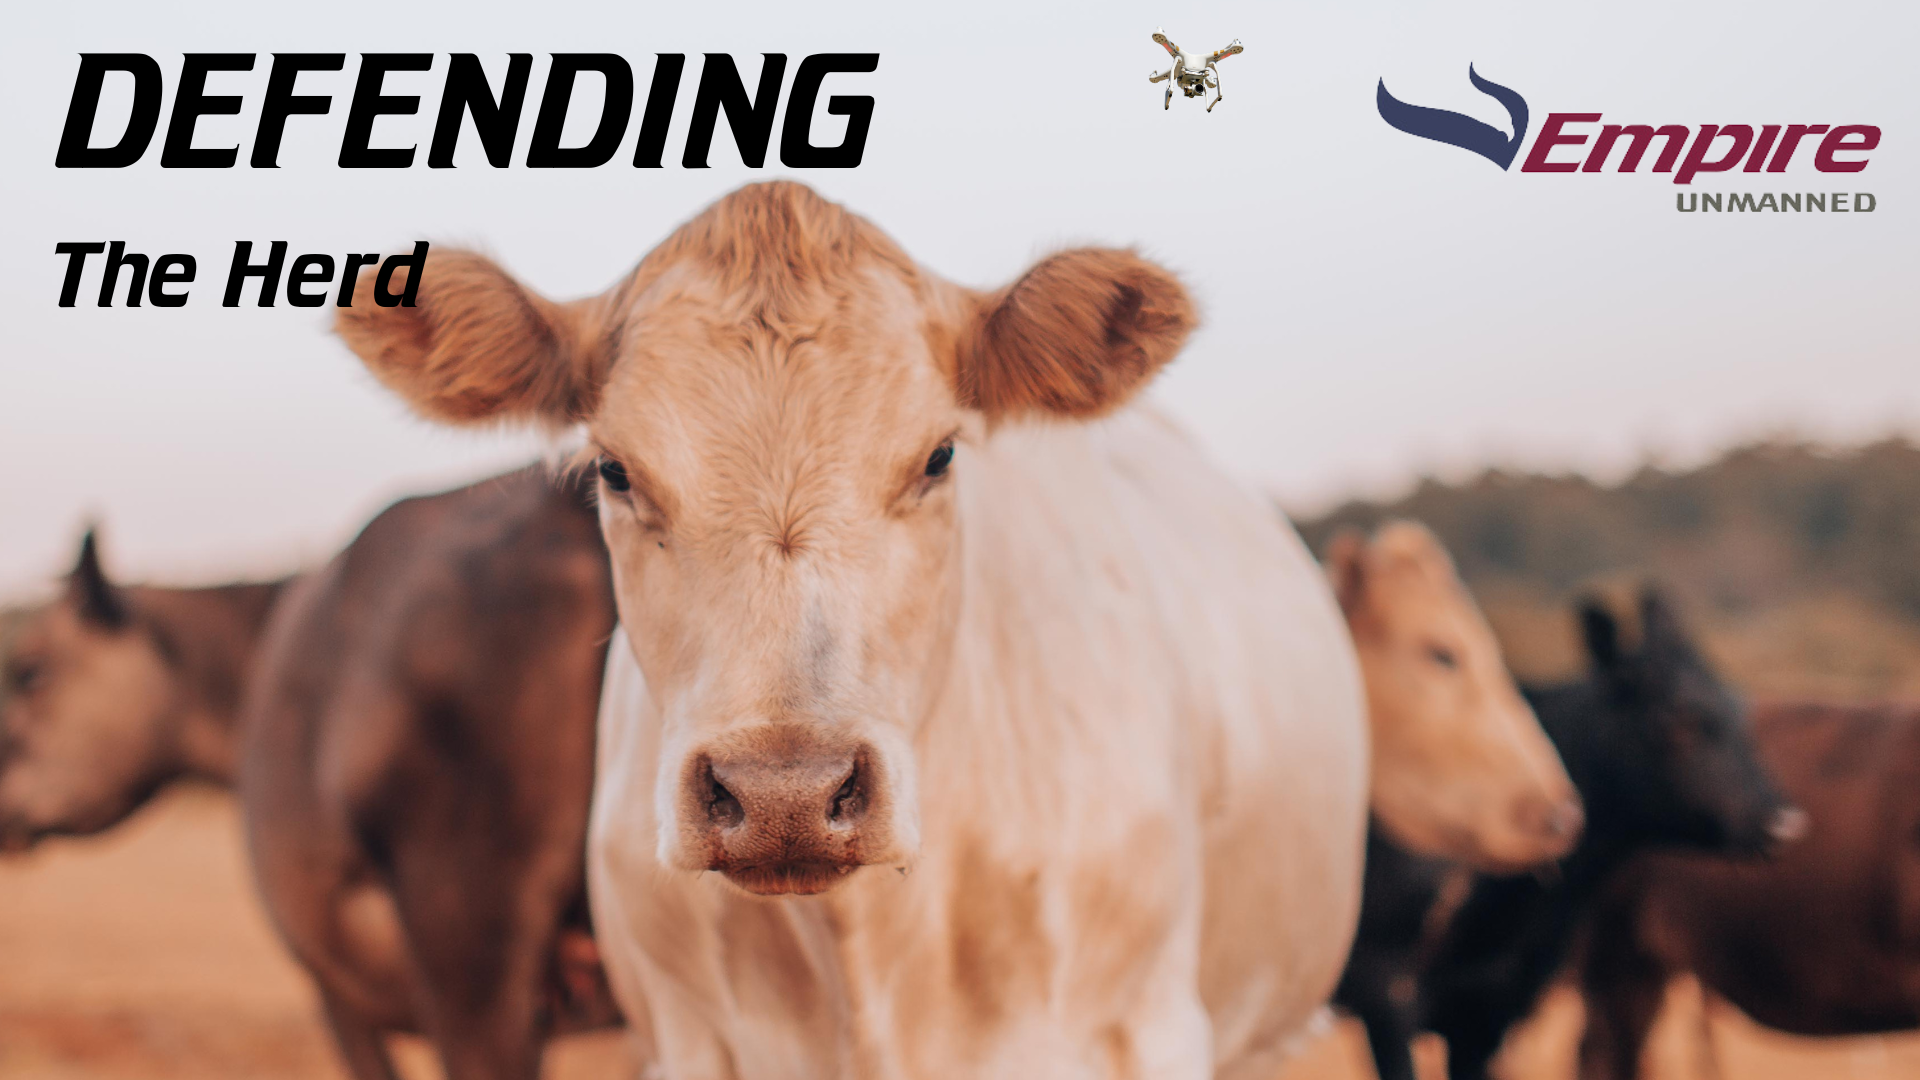 Defending the Herd: Utilizing Drones to Combat Cattle Rustling in the Western US